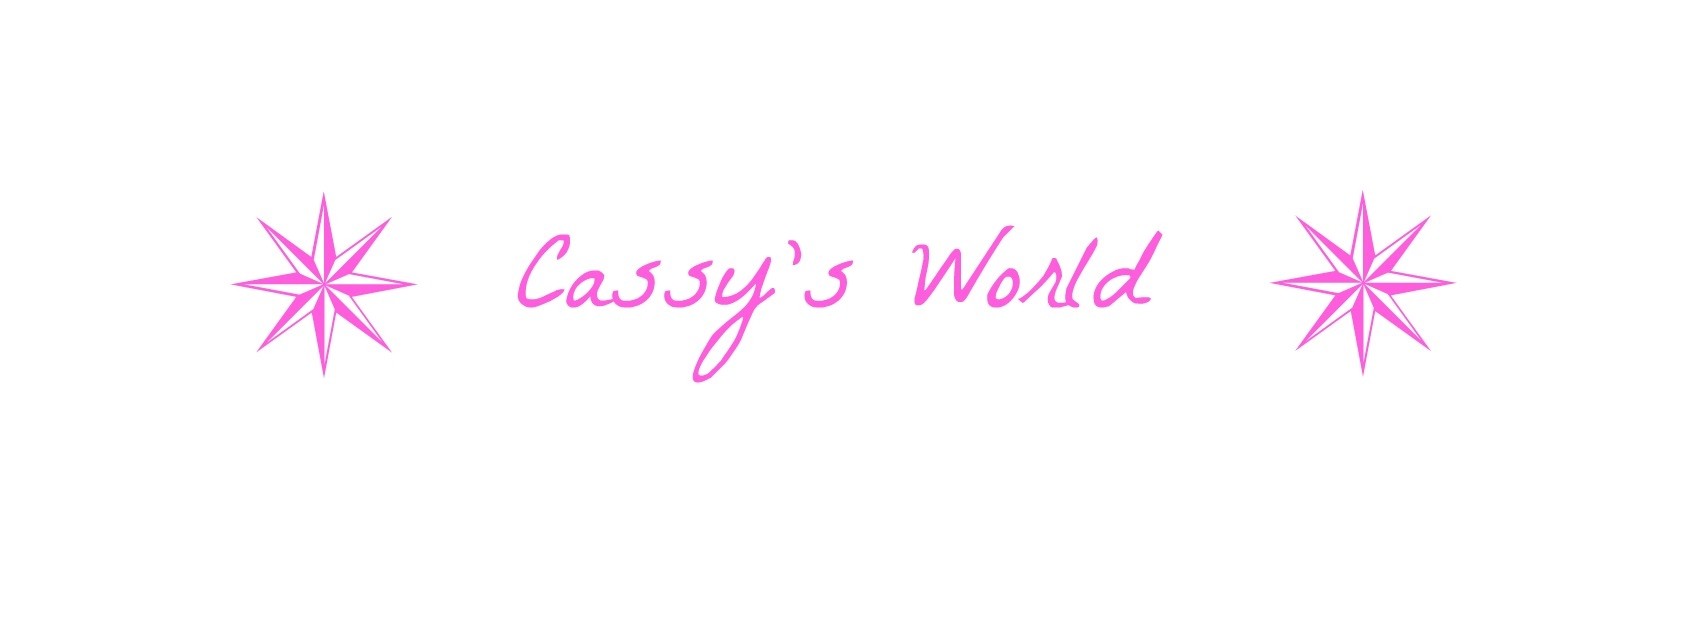 CASSY'S WORLD